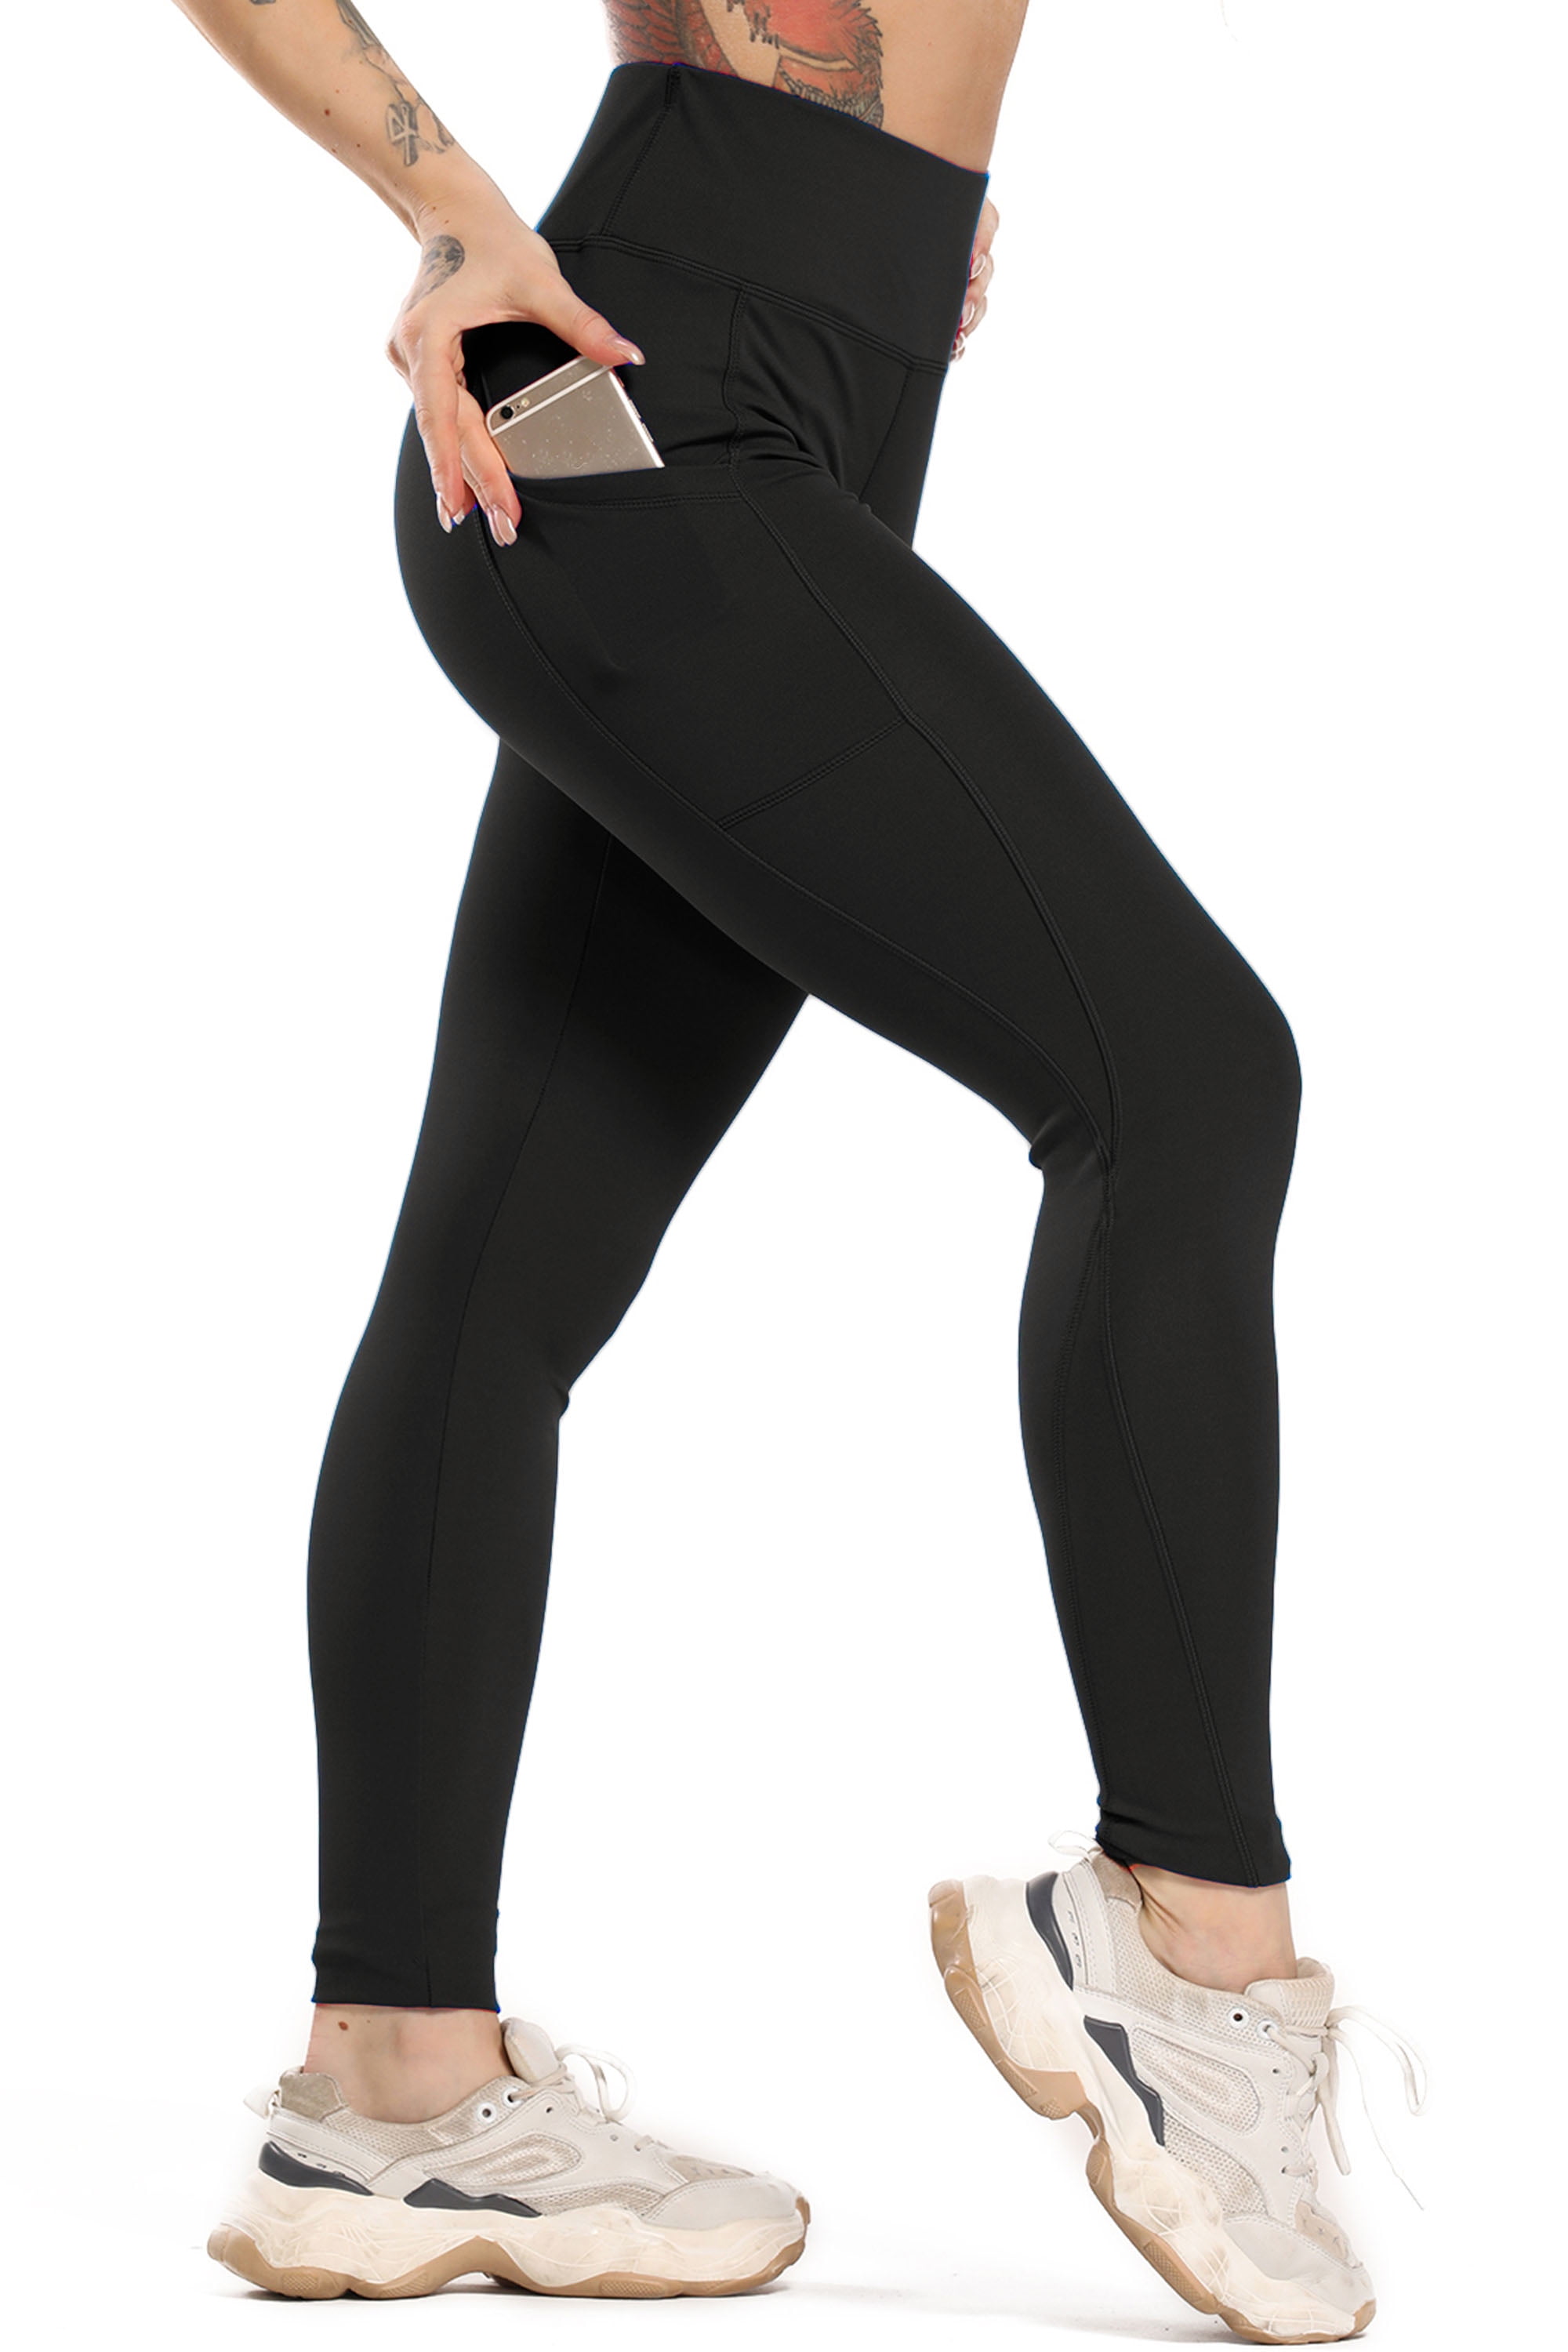 Pack Leggings Tummy Control Softy Stretch Butt Lift Pants for Women Yoga Workout High Waist Yoga Pants Pockets 